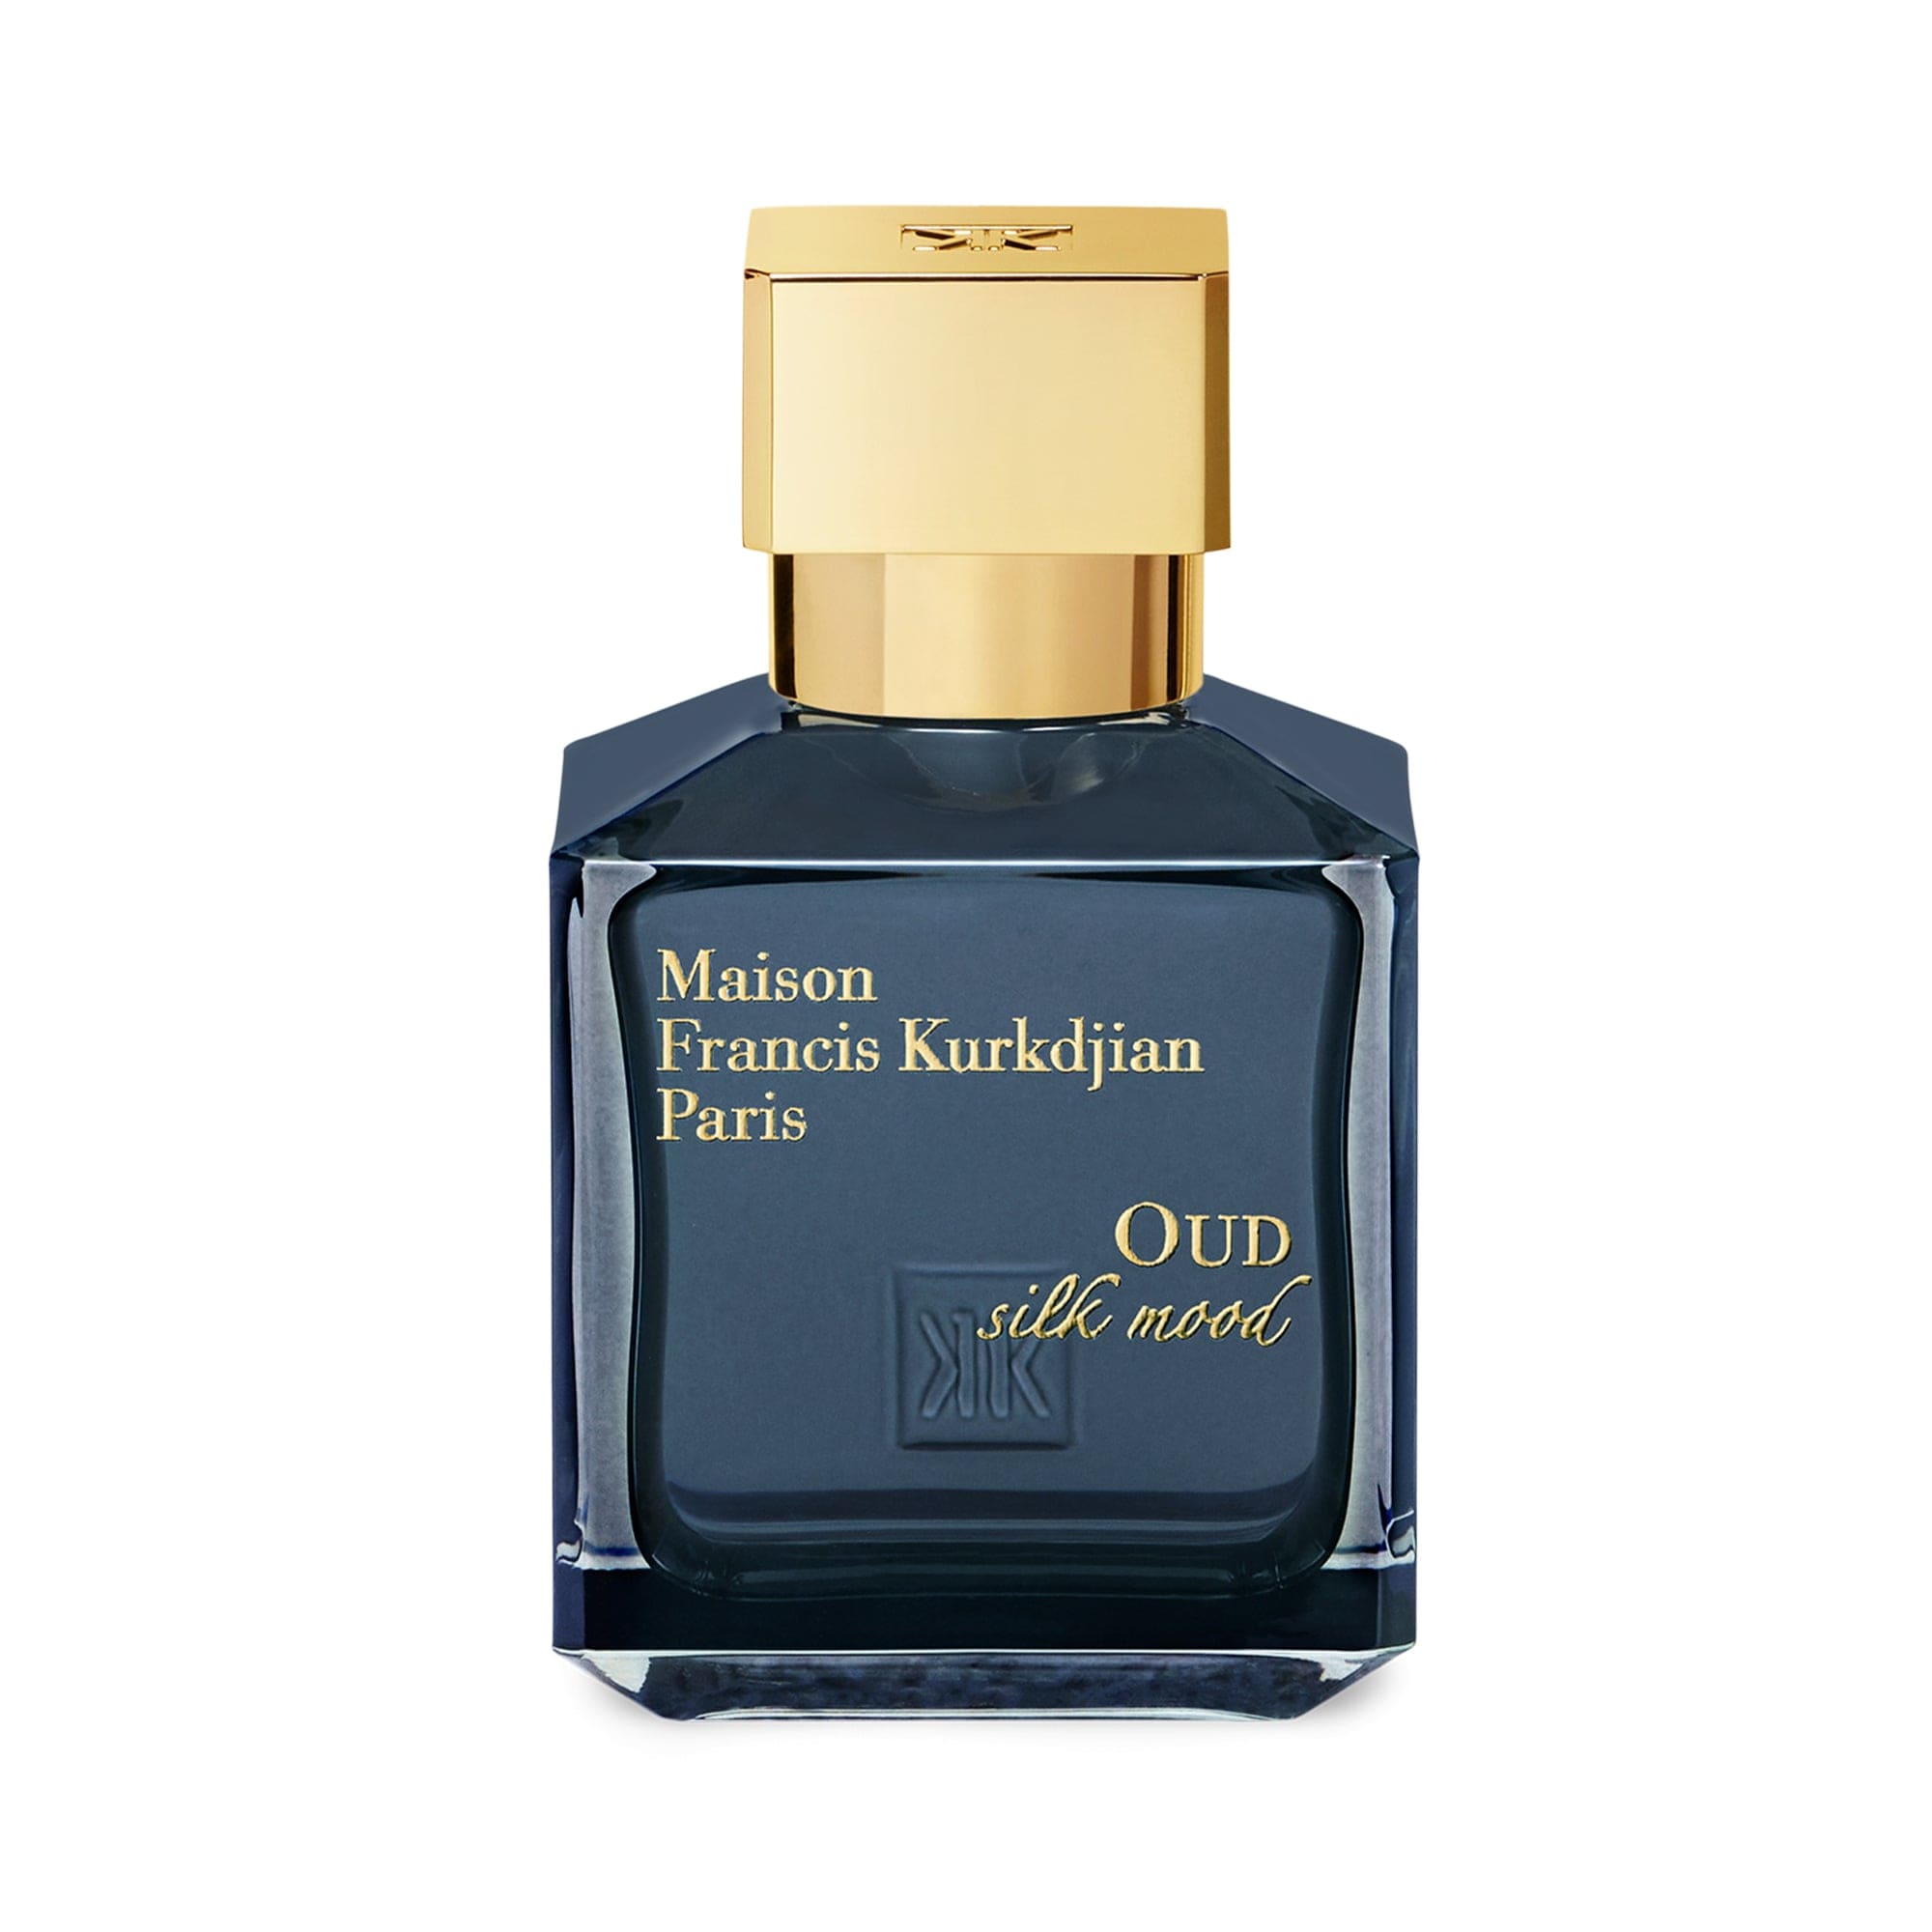 OUD Silk Mood de Maison Francis Kurkdjian Eau de Parfum